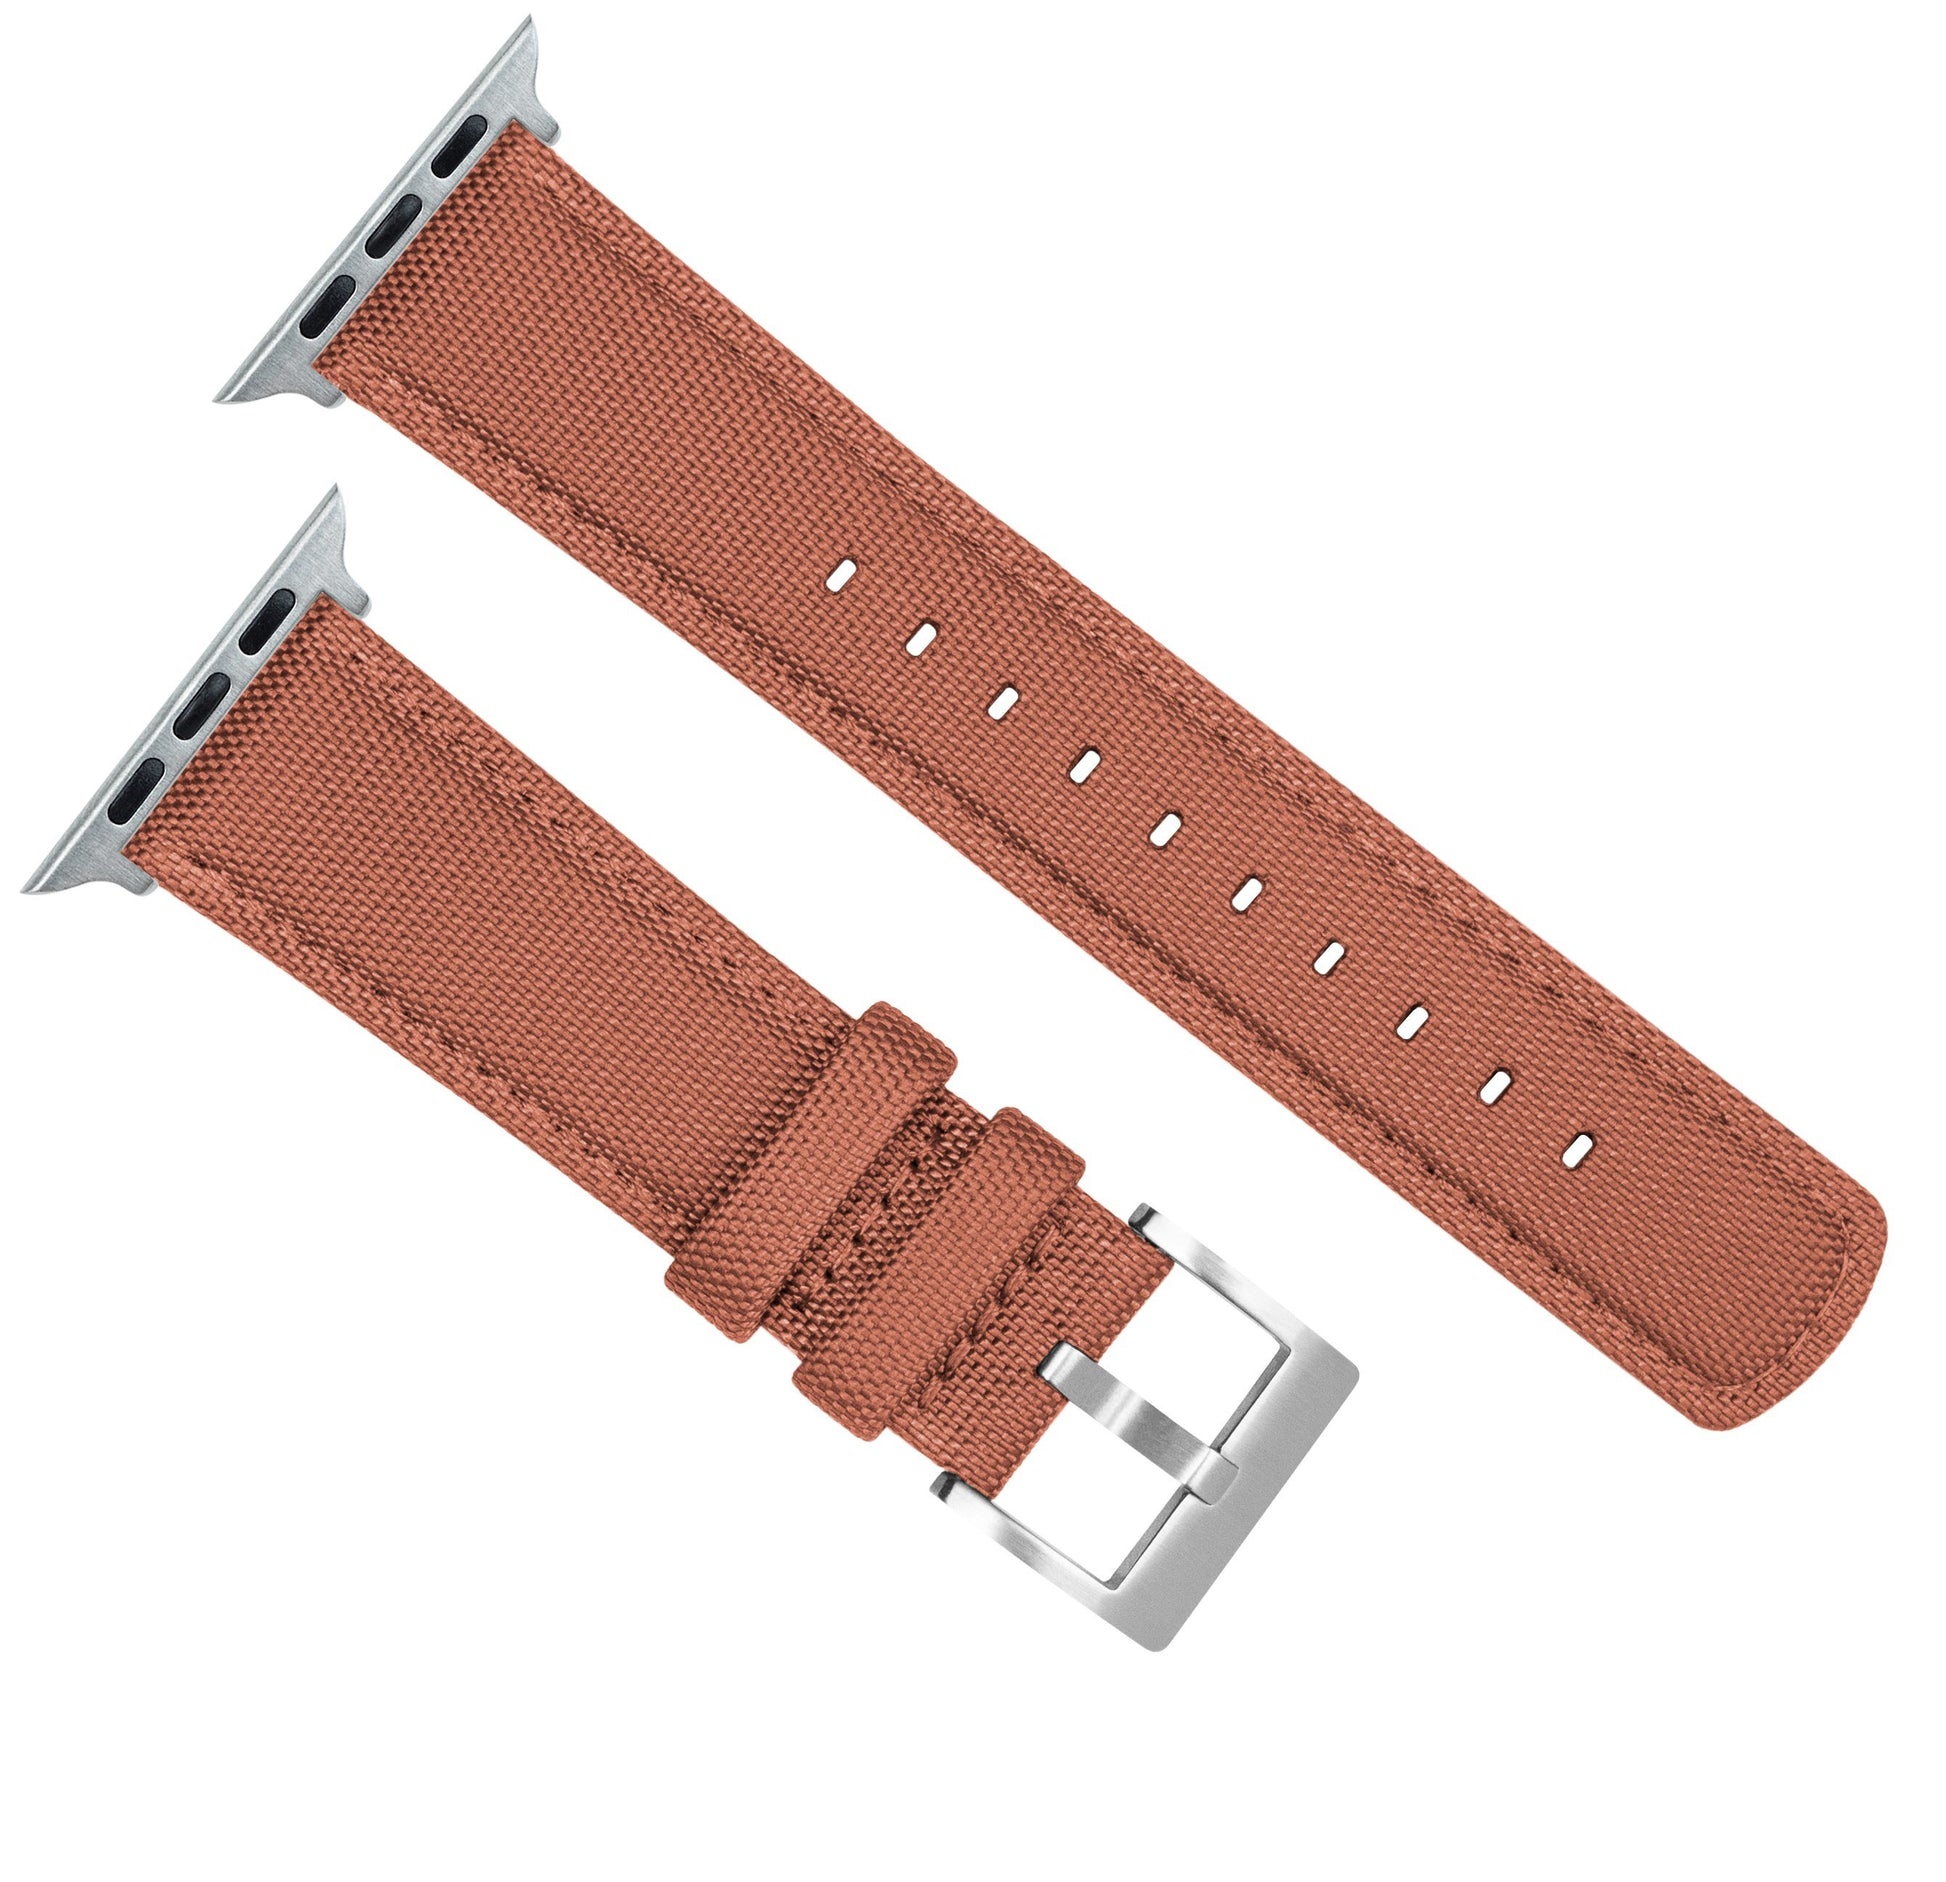 Apple Watch | Copper Orange Sailcloth - Barton Watch Bands